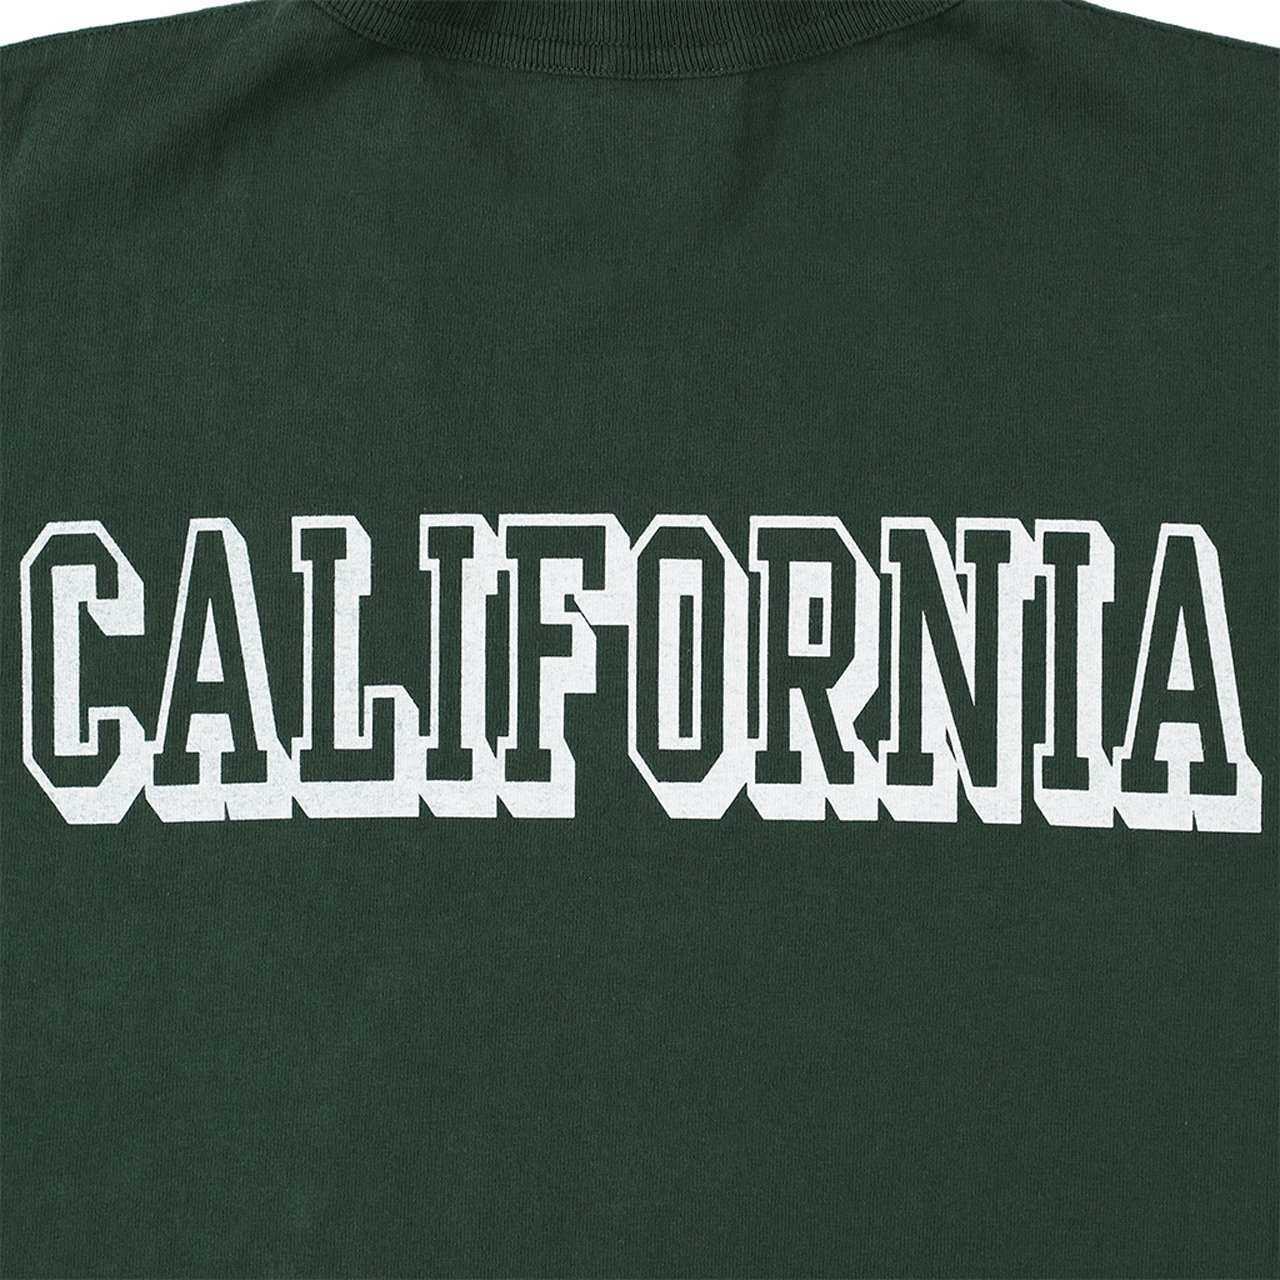 STANDARD CALIFORNIA(スタンダードカリフォルニア)24SS/春夏
Champion×SD T1011
TSOSD120 
チャンピオン
半袖Tシャツ
スタカリ